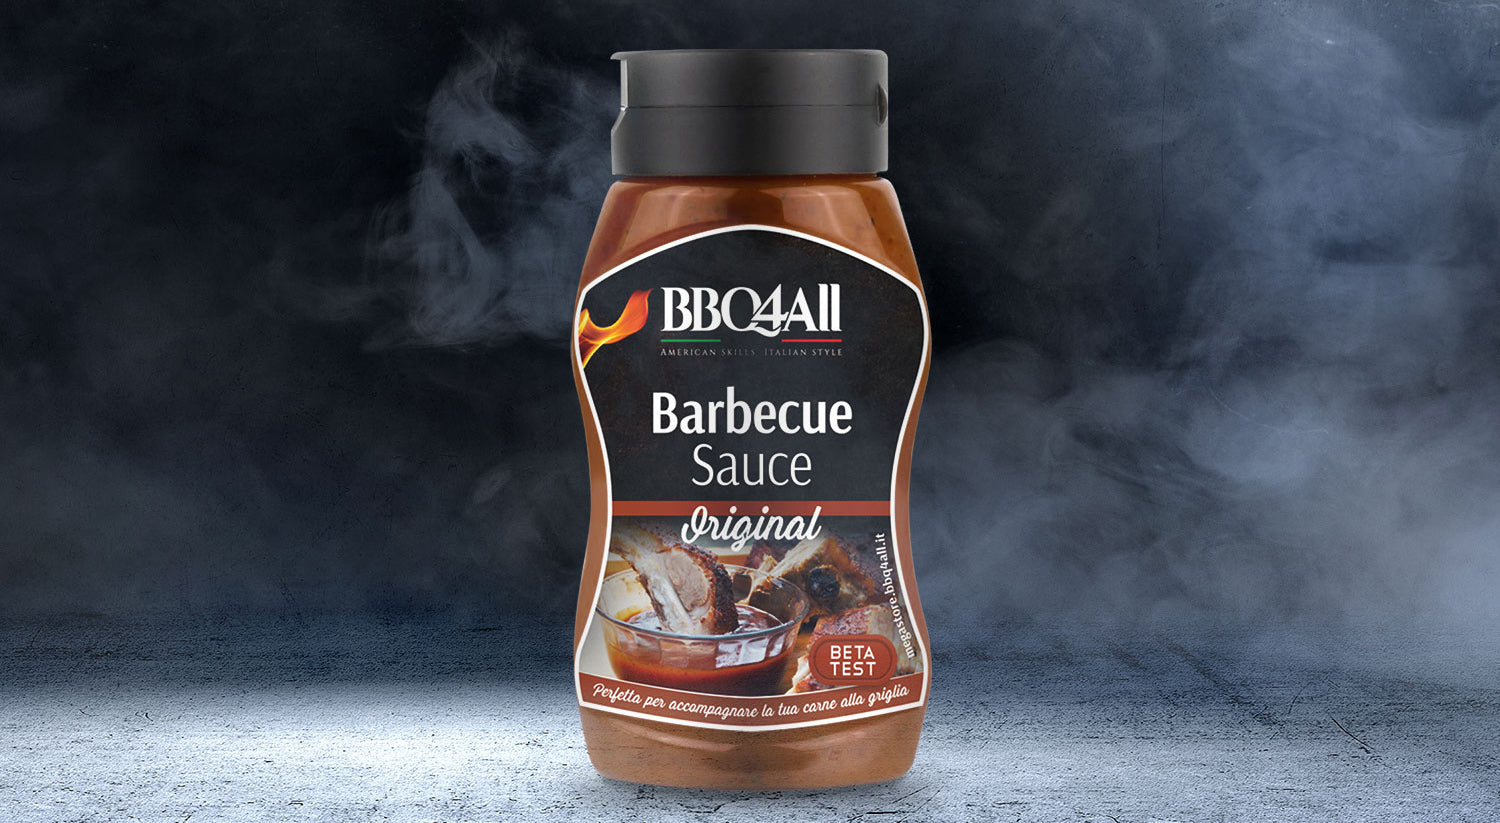 BBQ4All Barbecue Sauce - Original